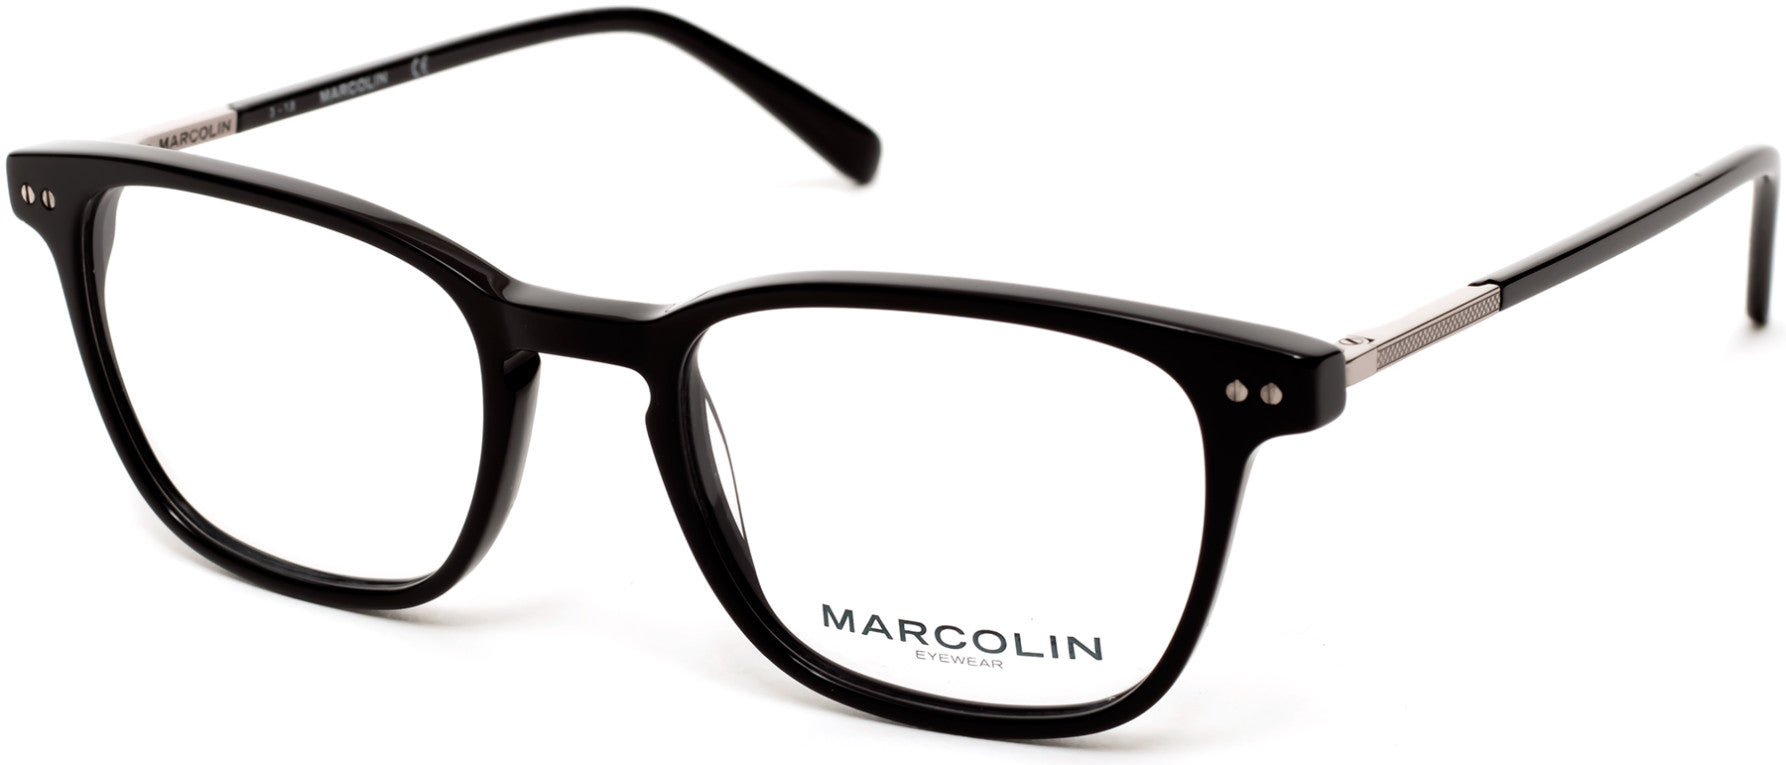 Marcolin MA3017 Round Eyeglasses 001-001 - Shiny Black